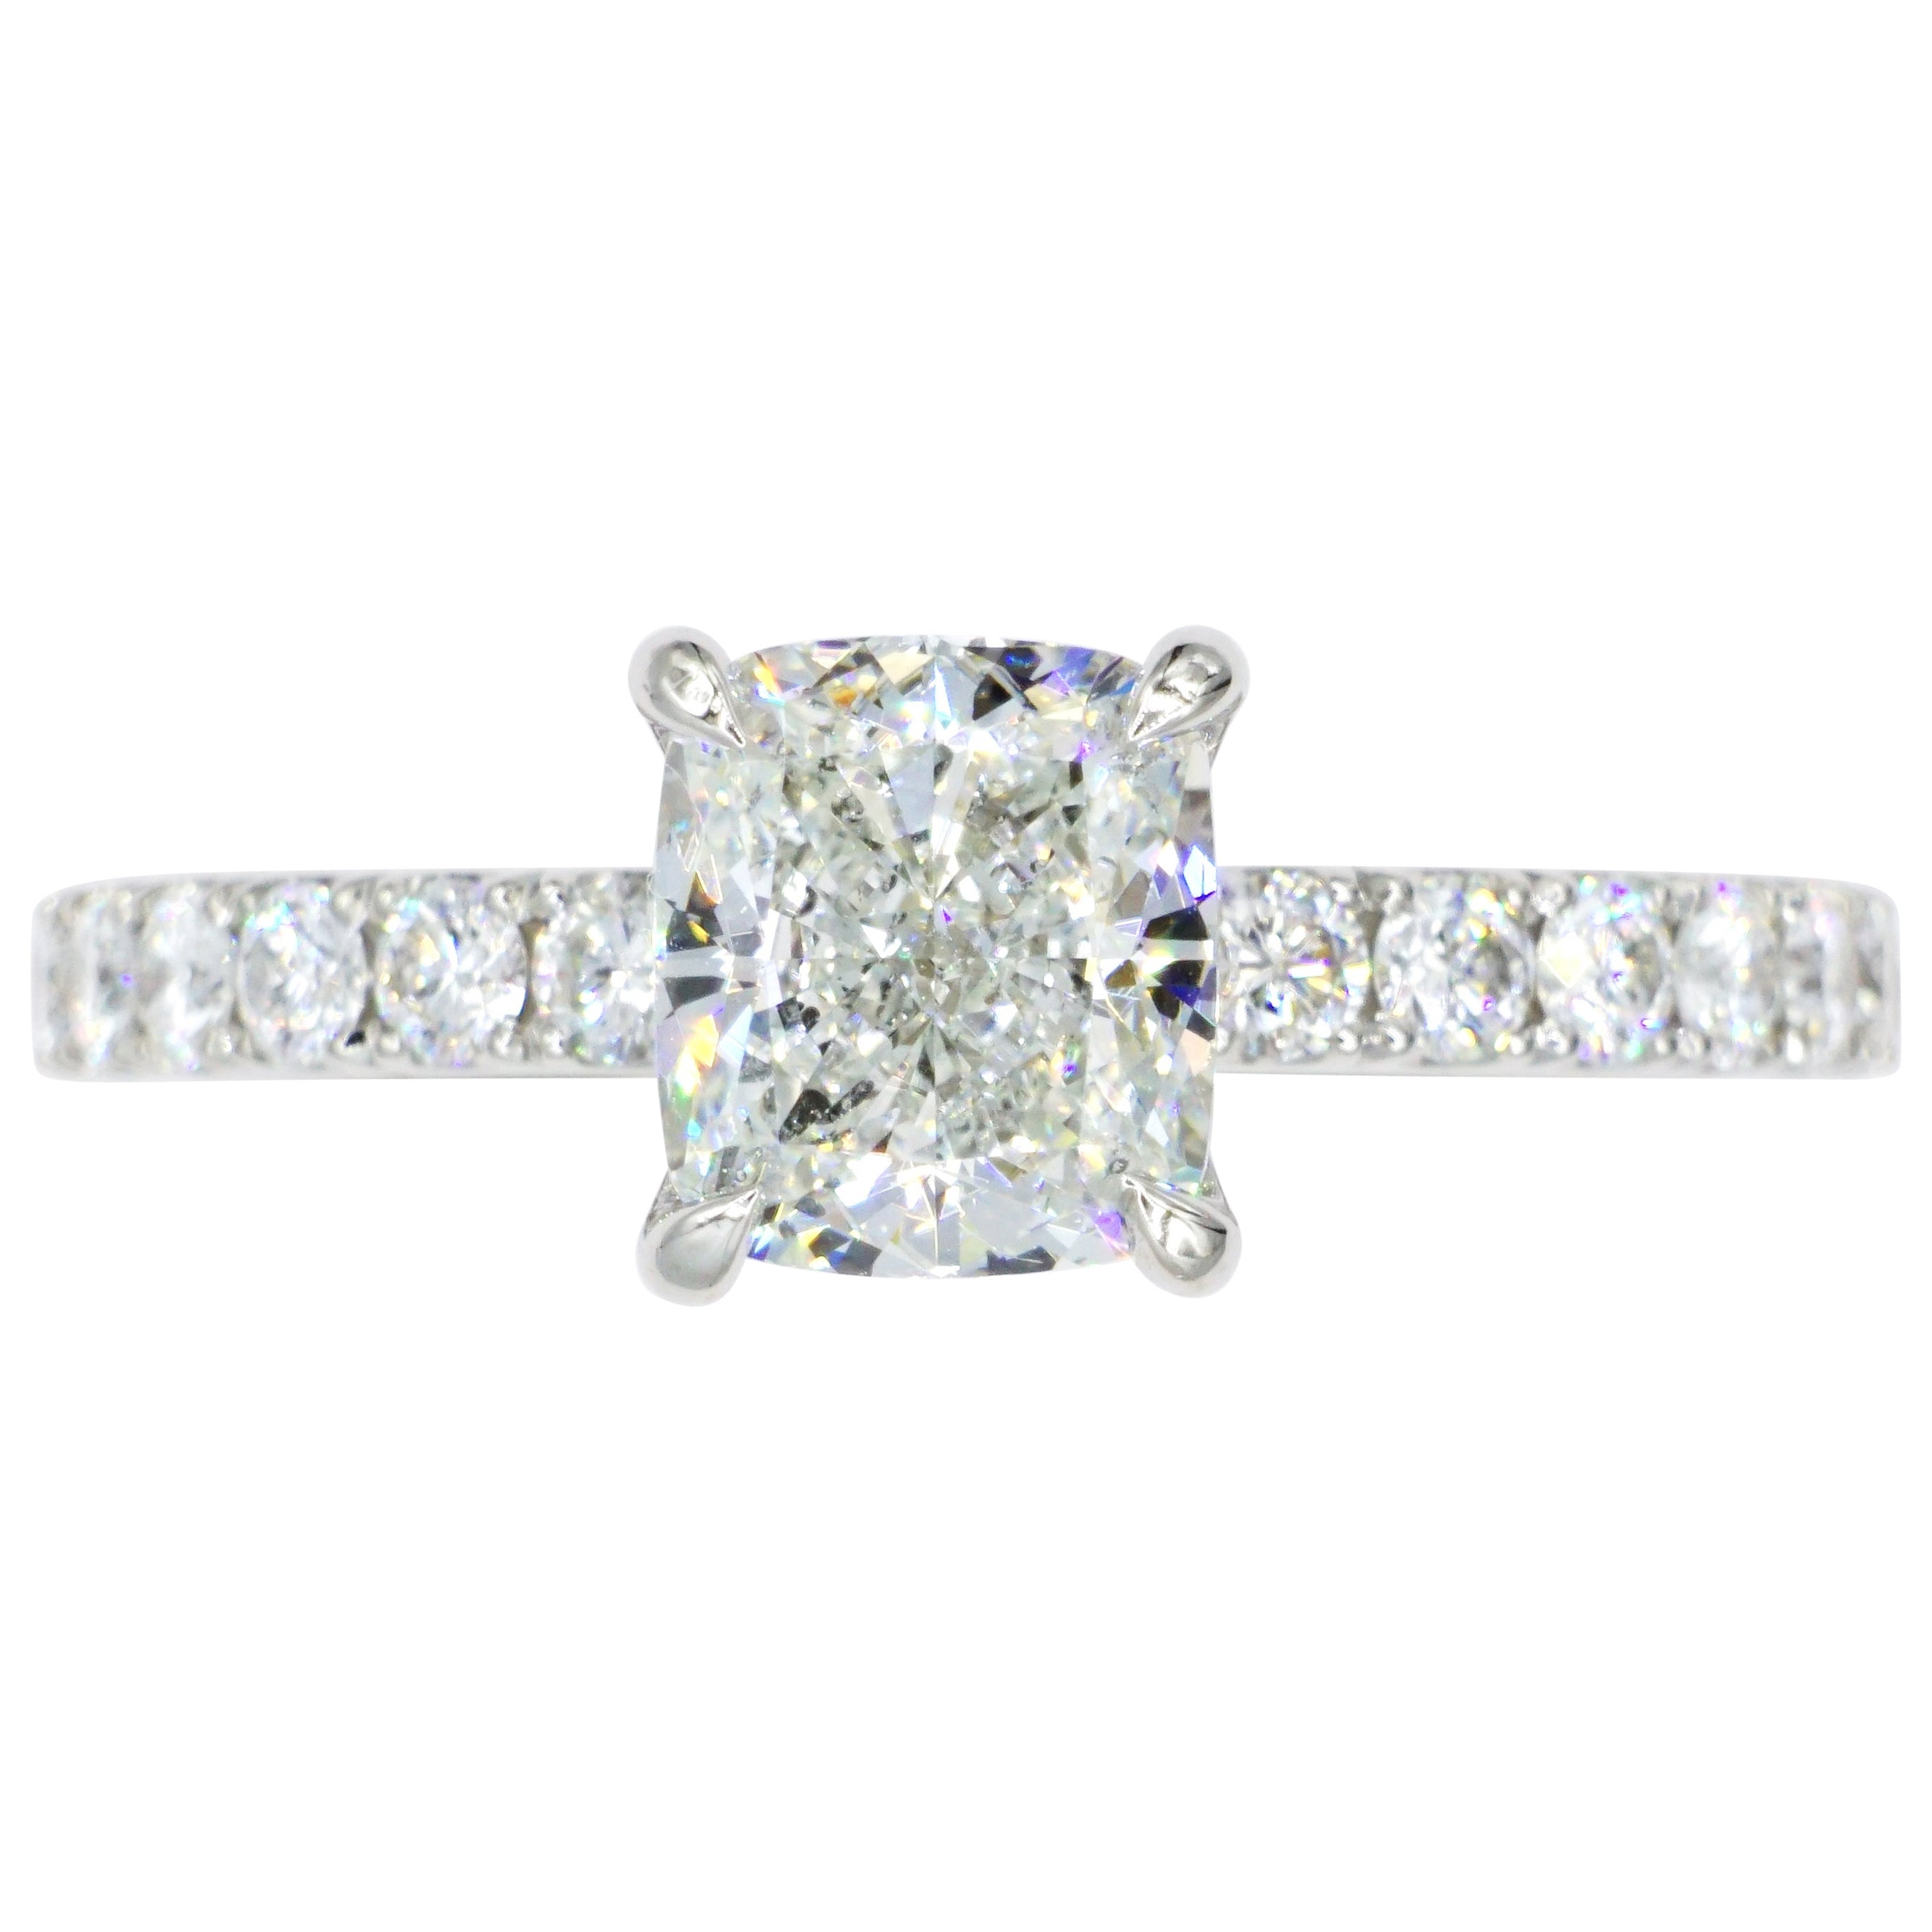 Platinum Cushion 1.51ct Diamond Engagement Ring GIA Cert G SI2, size 6.25 - NEW